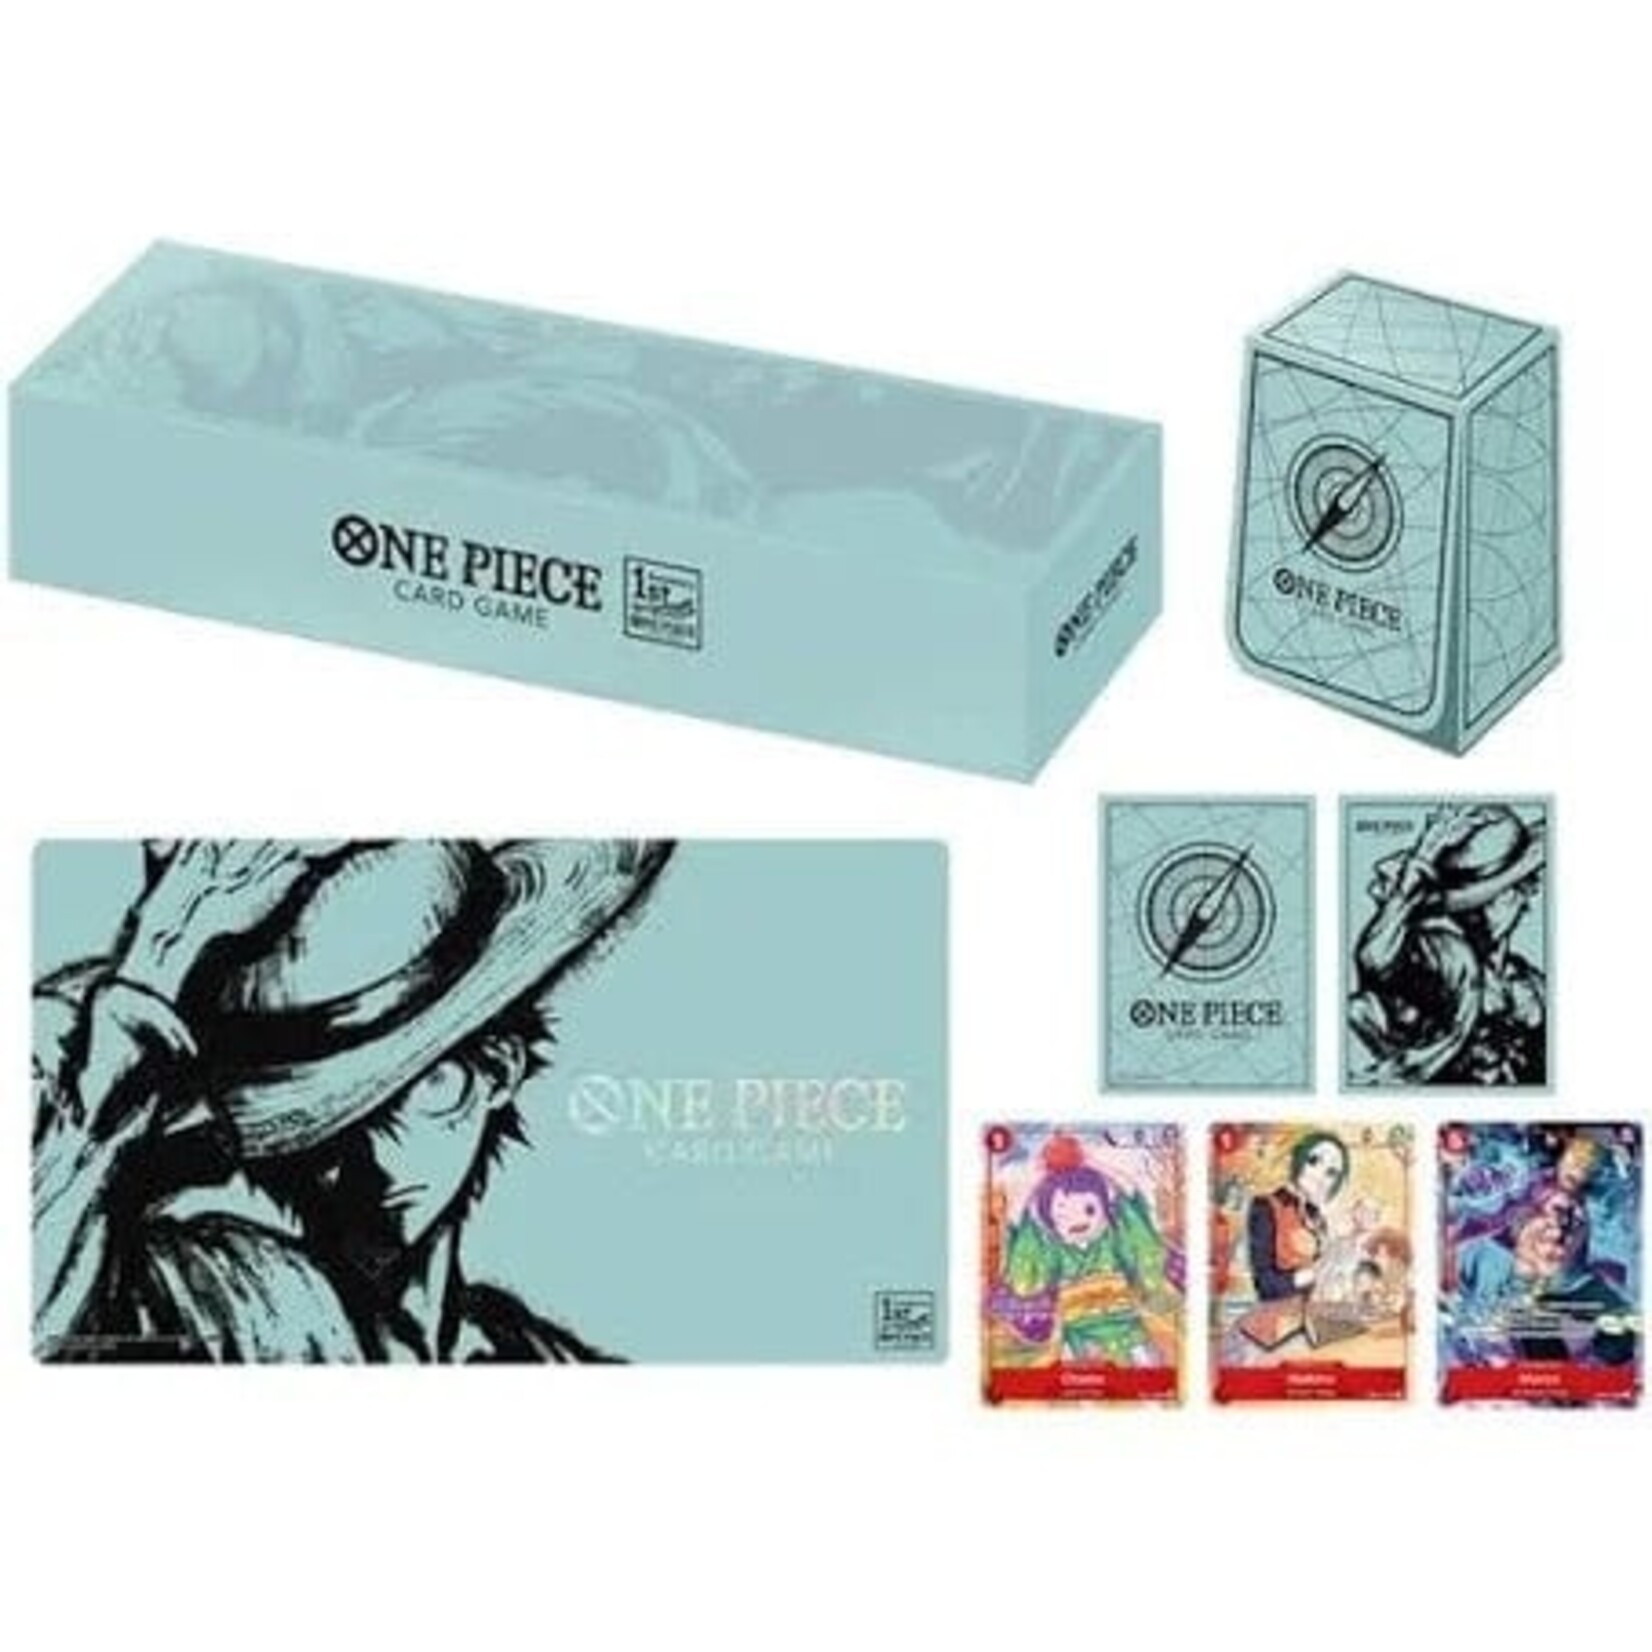 One Piece Card Game Japanese 1st Anniversary Set - EN